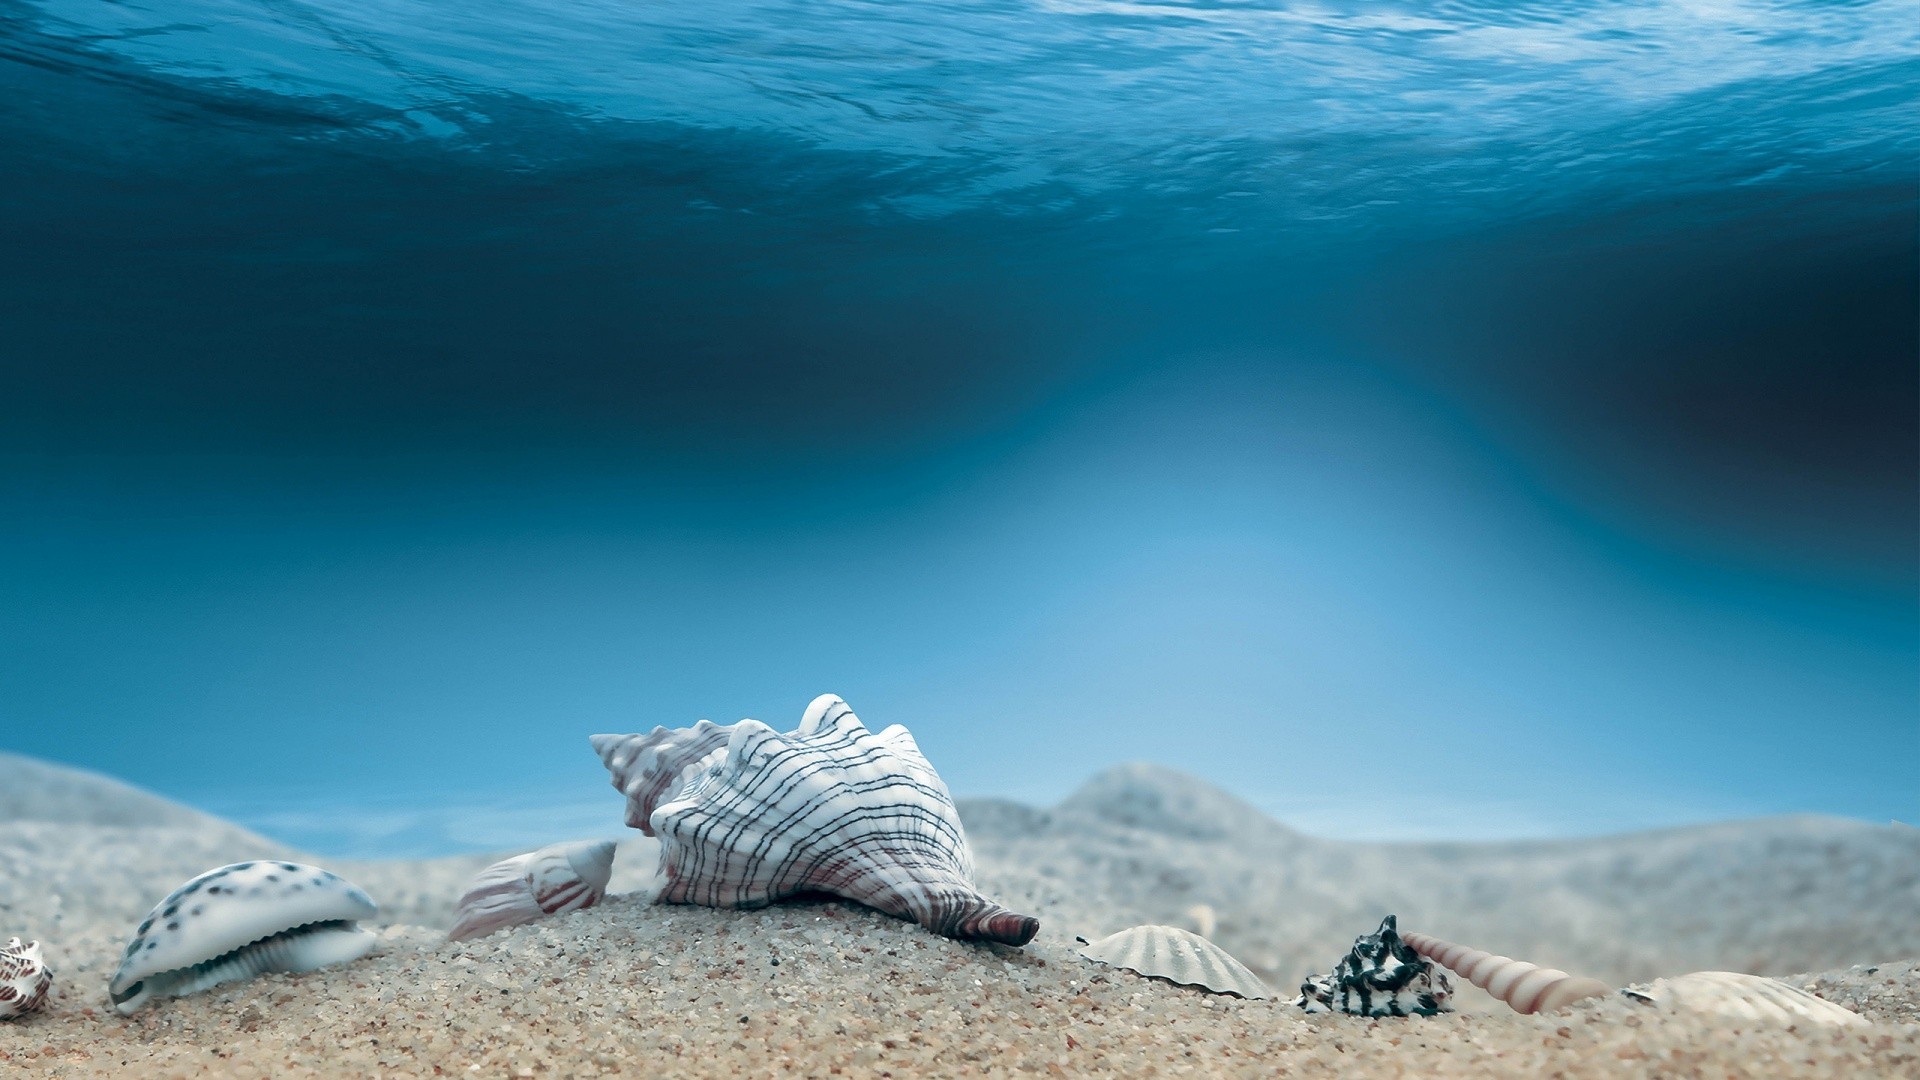 1920x1080 Shells Tag - Underwater Sea Sand Shells Art Ocean Digital Water Download  Wallpaper Of Nature For